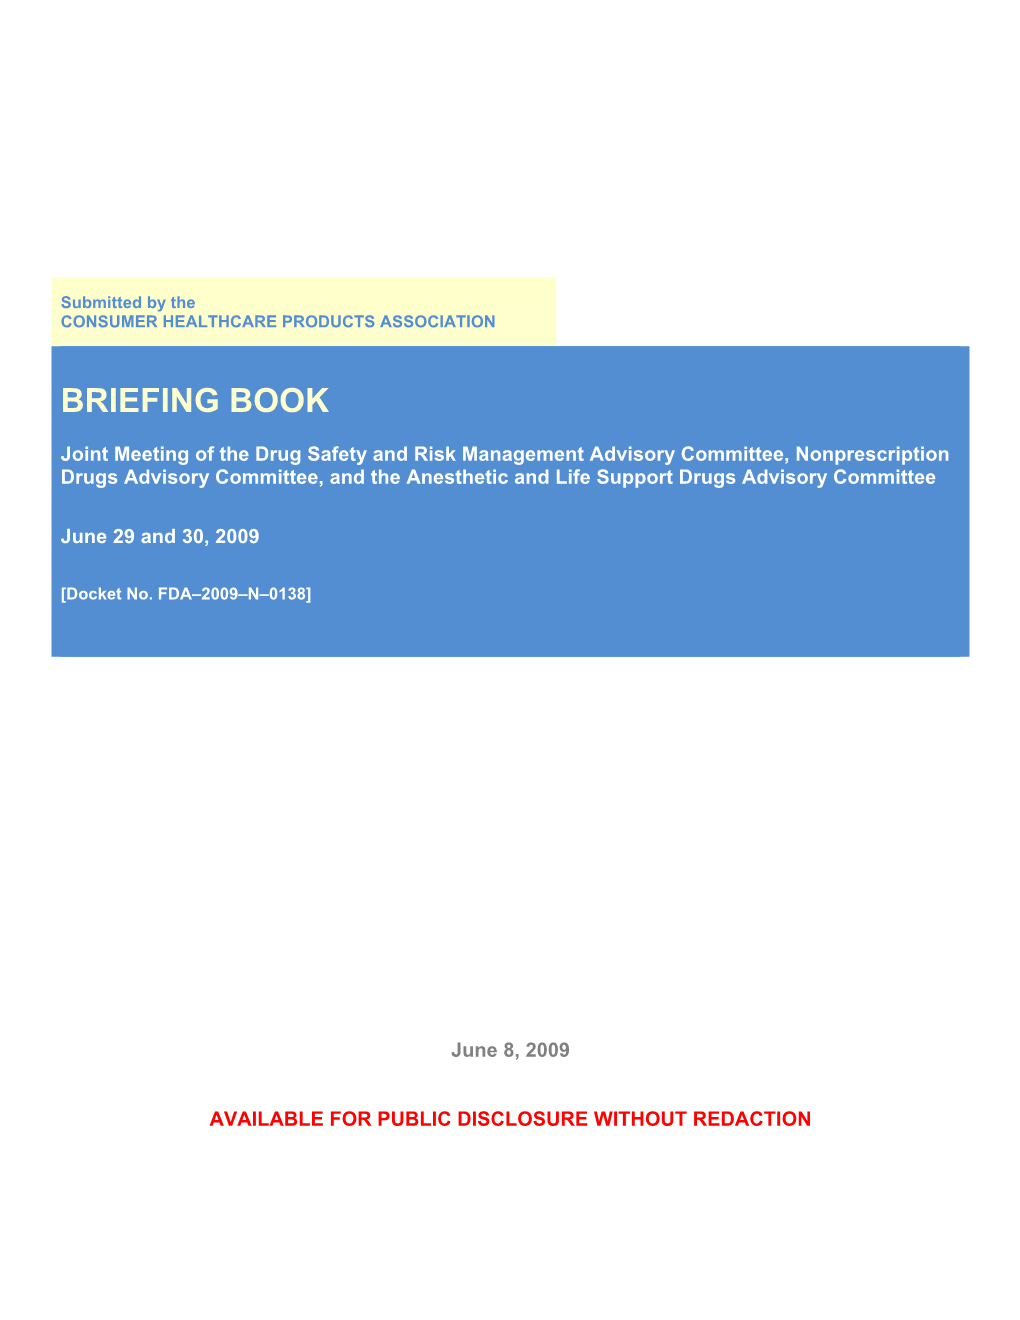 Briefing Book